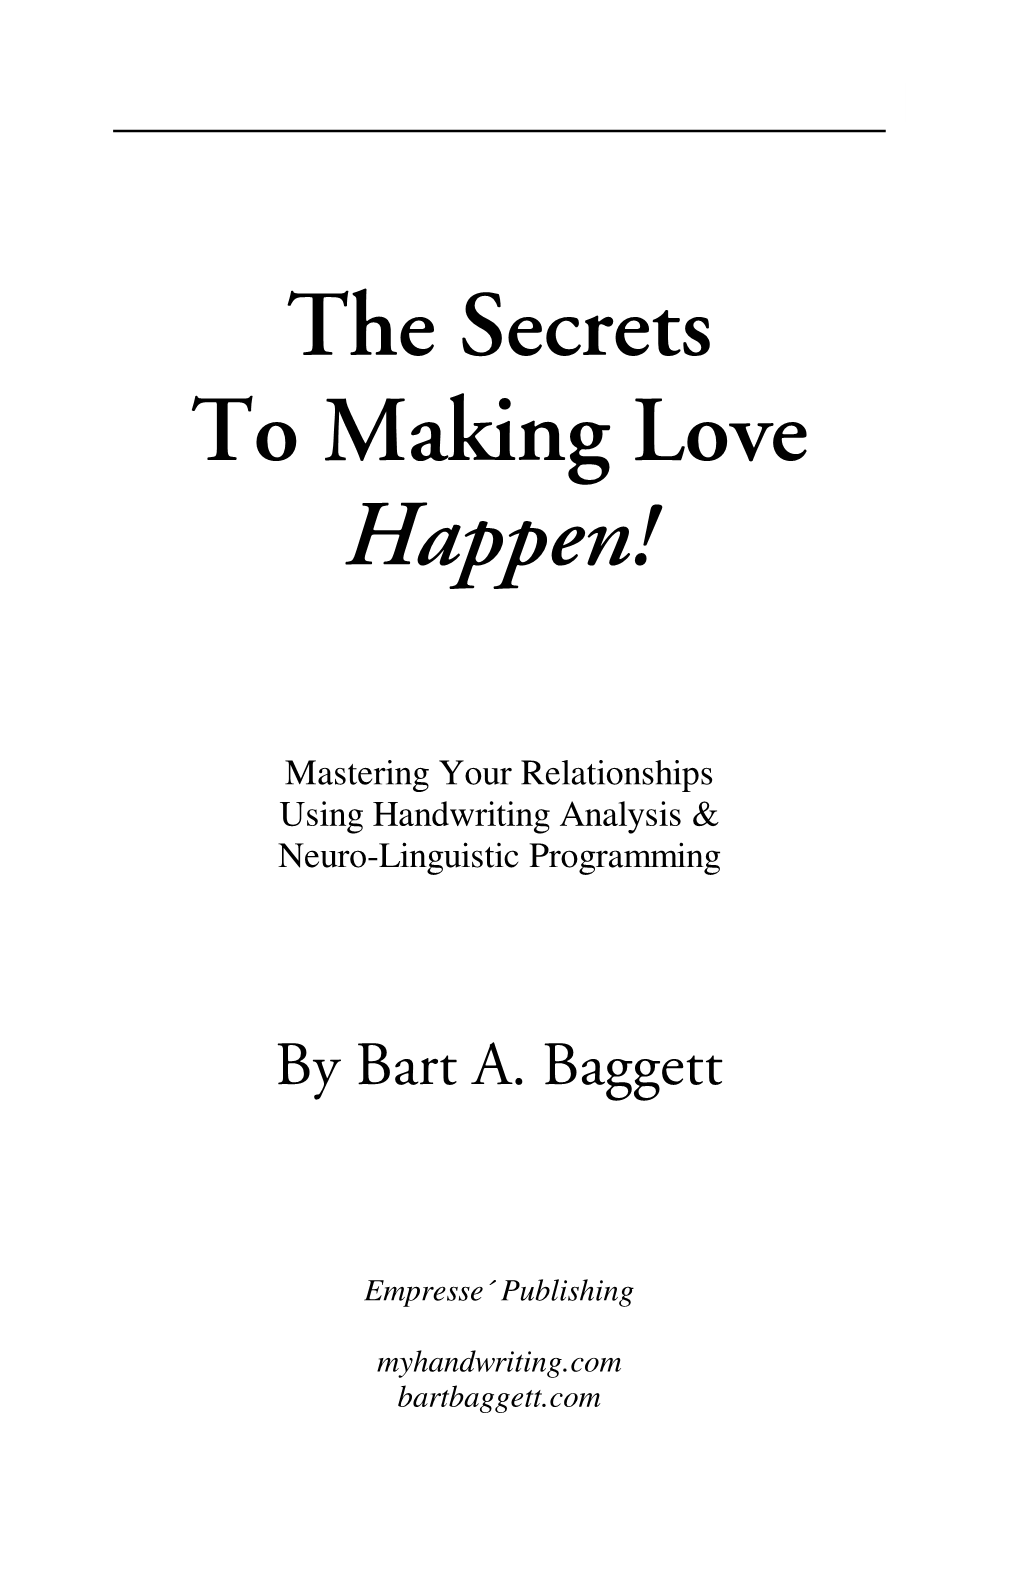 The Secrets to Making Love Happen!